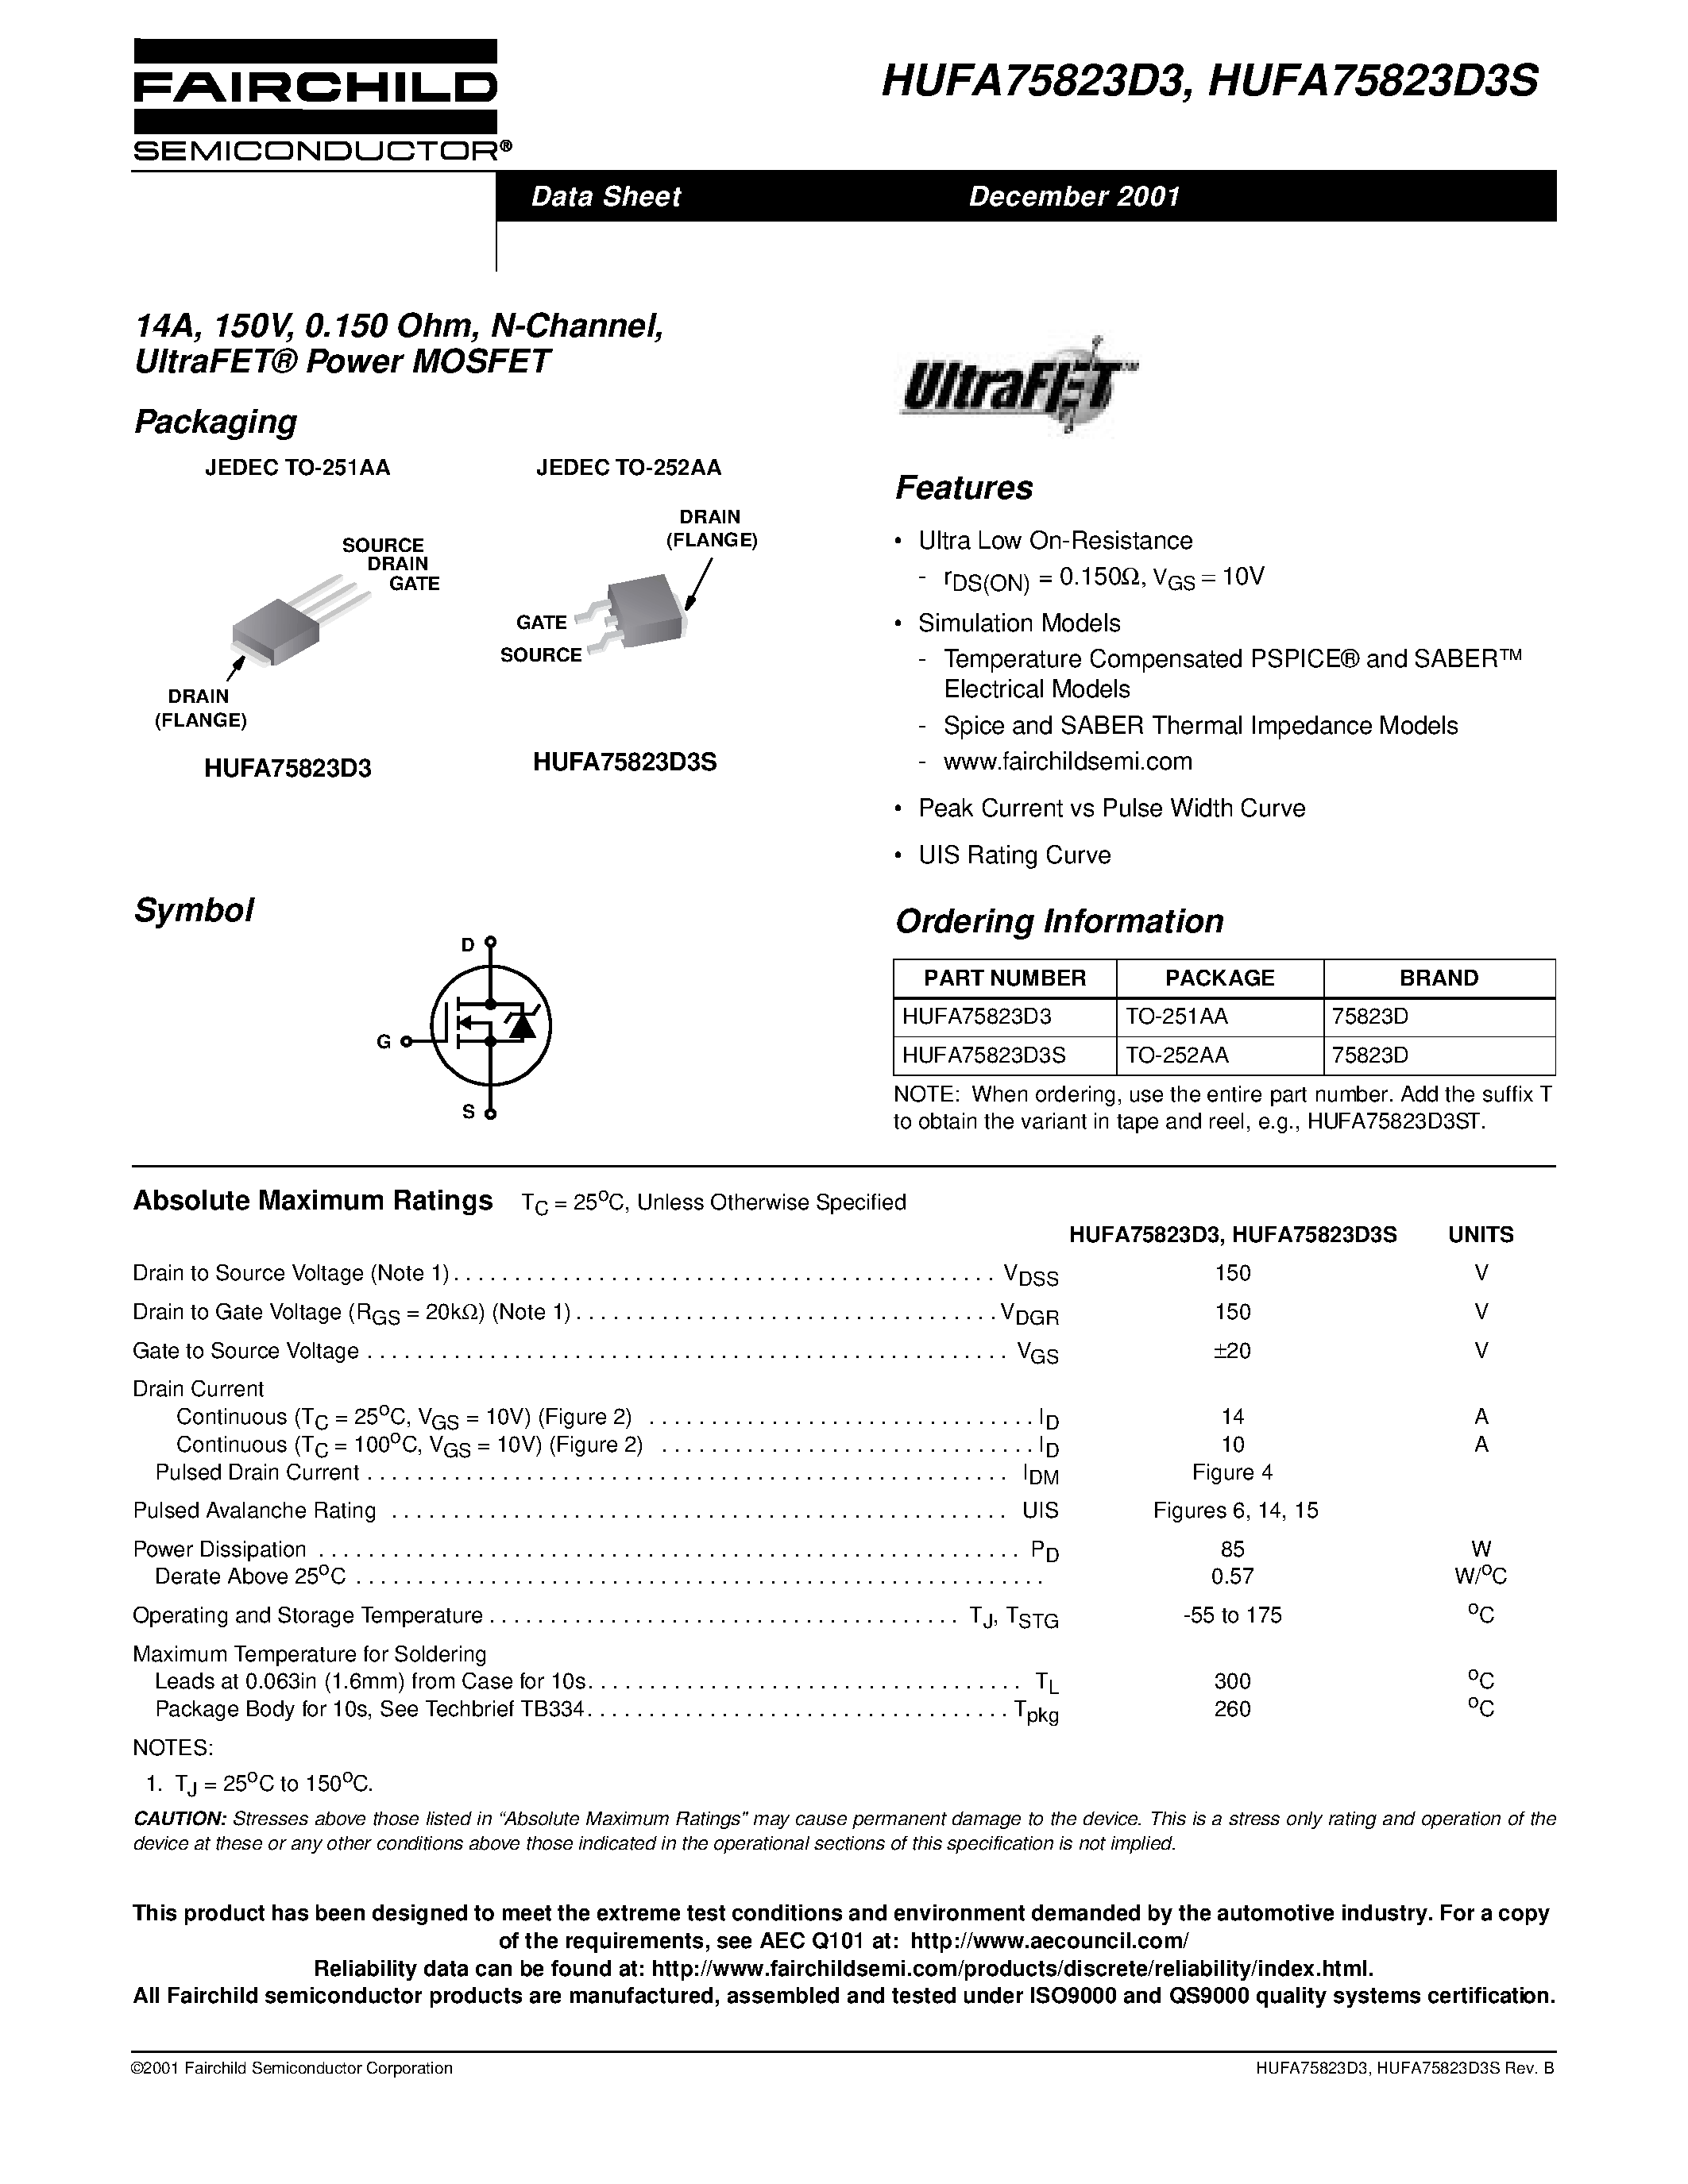 Даташит HUFA75823D3 - 14A/ 150V/ 0.150 Ohm/ N-Channel/ UltraFET Power MOSFET страница 1